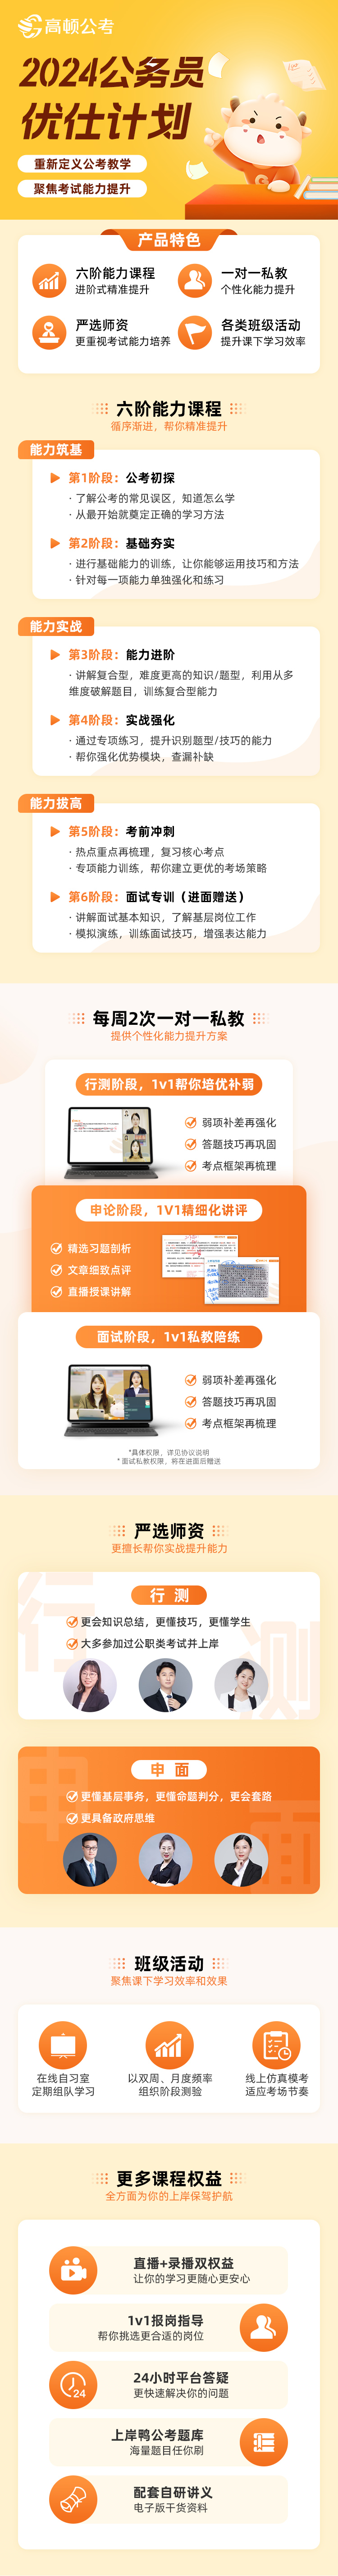 https://simg01.gaodunwangxiao.com/uploadfiles/product-center/202212/27/b7d9b_20221227092908.jpg